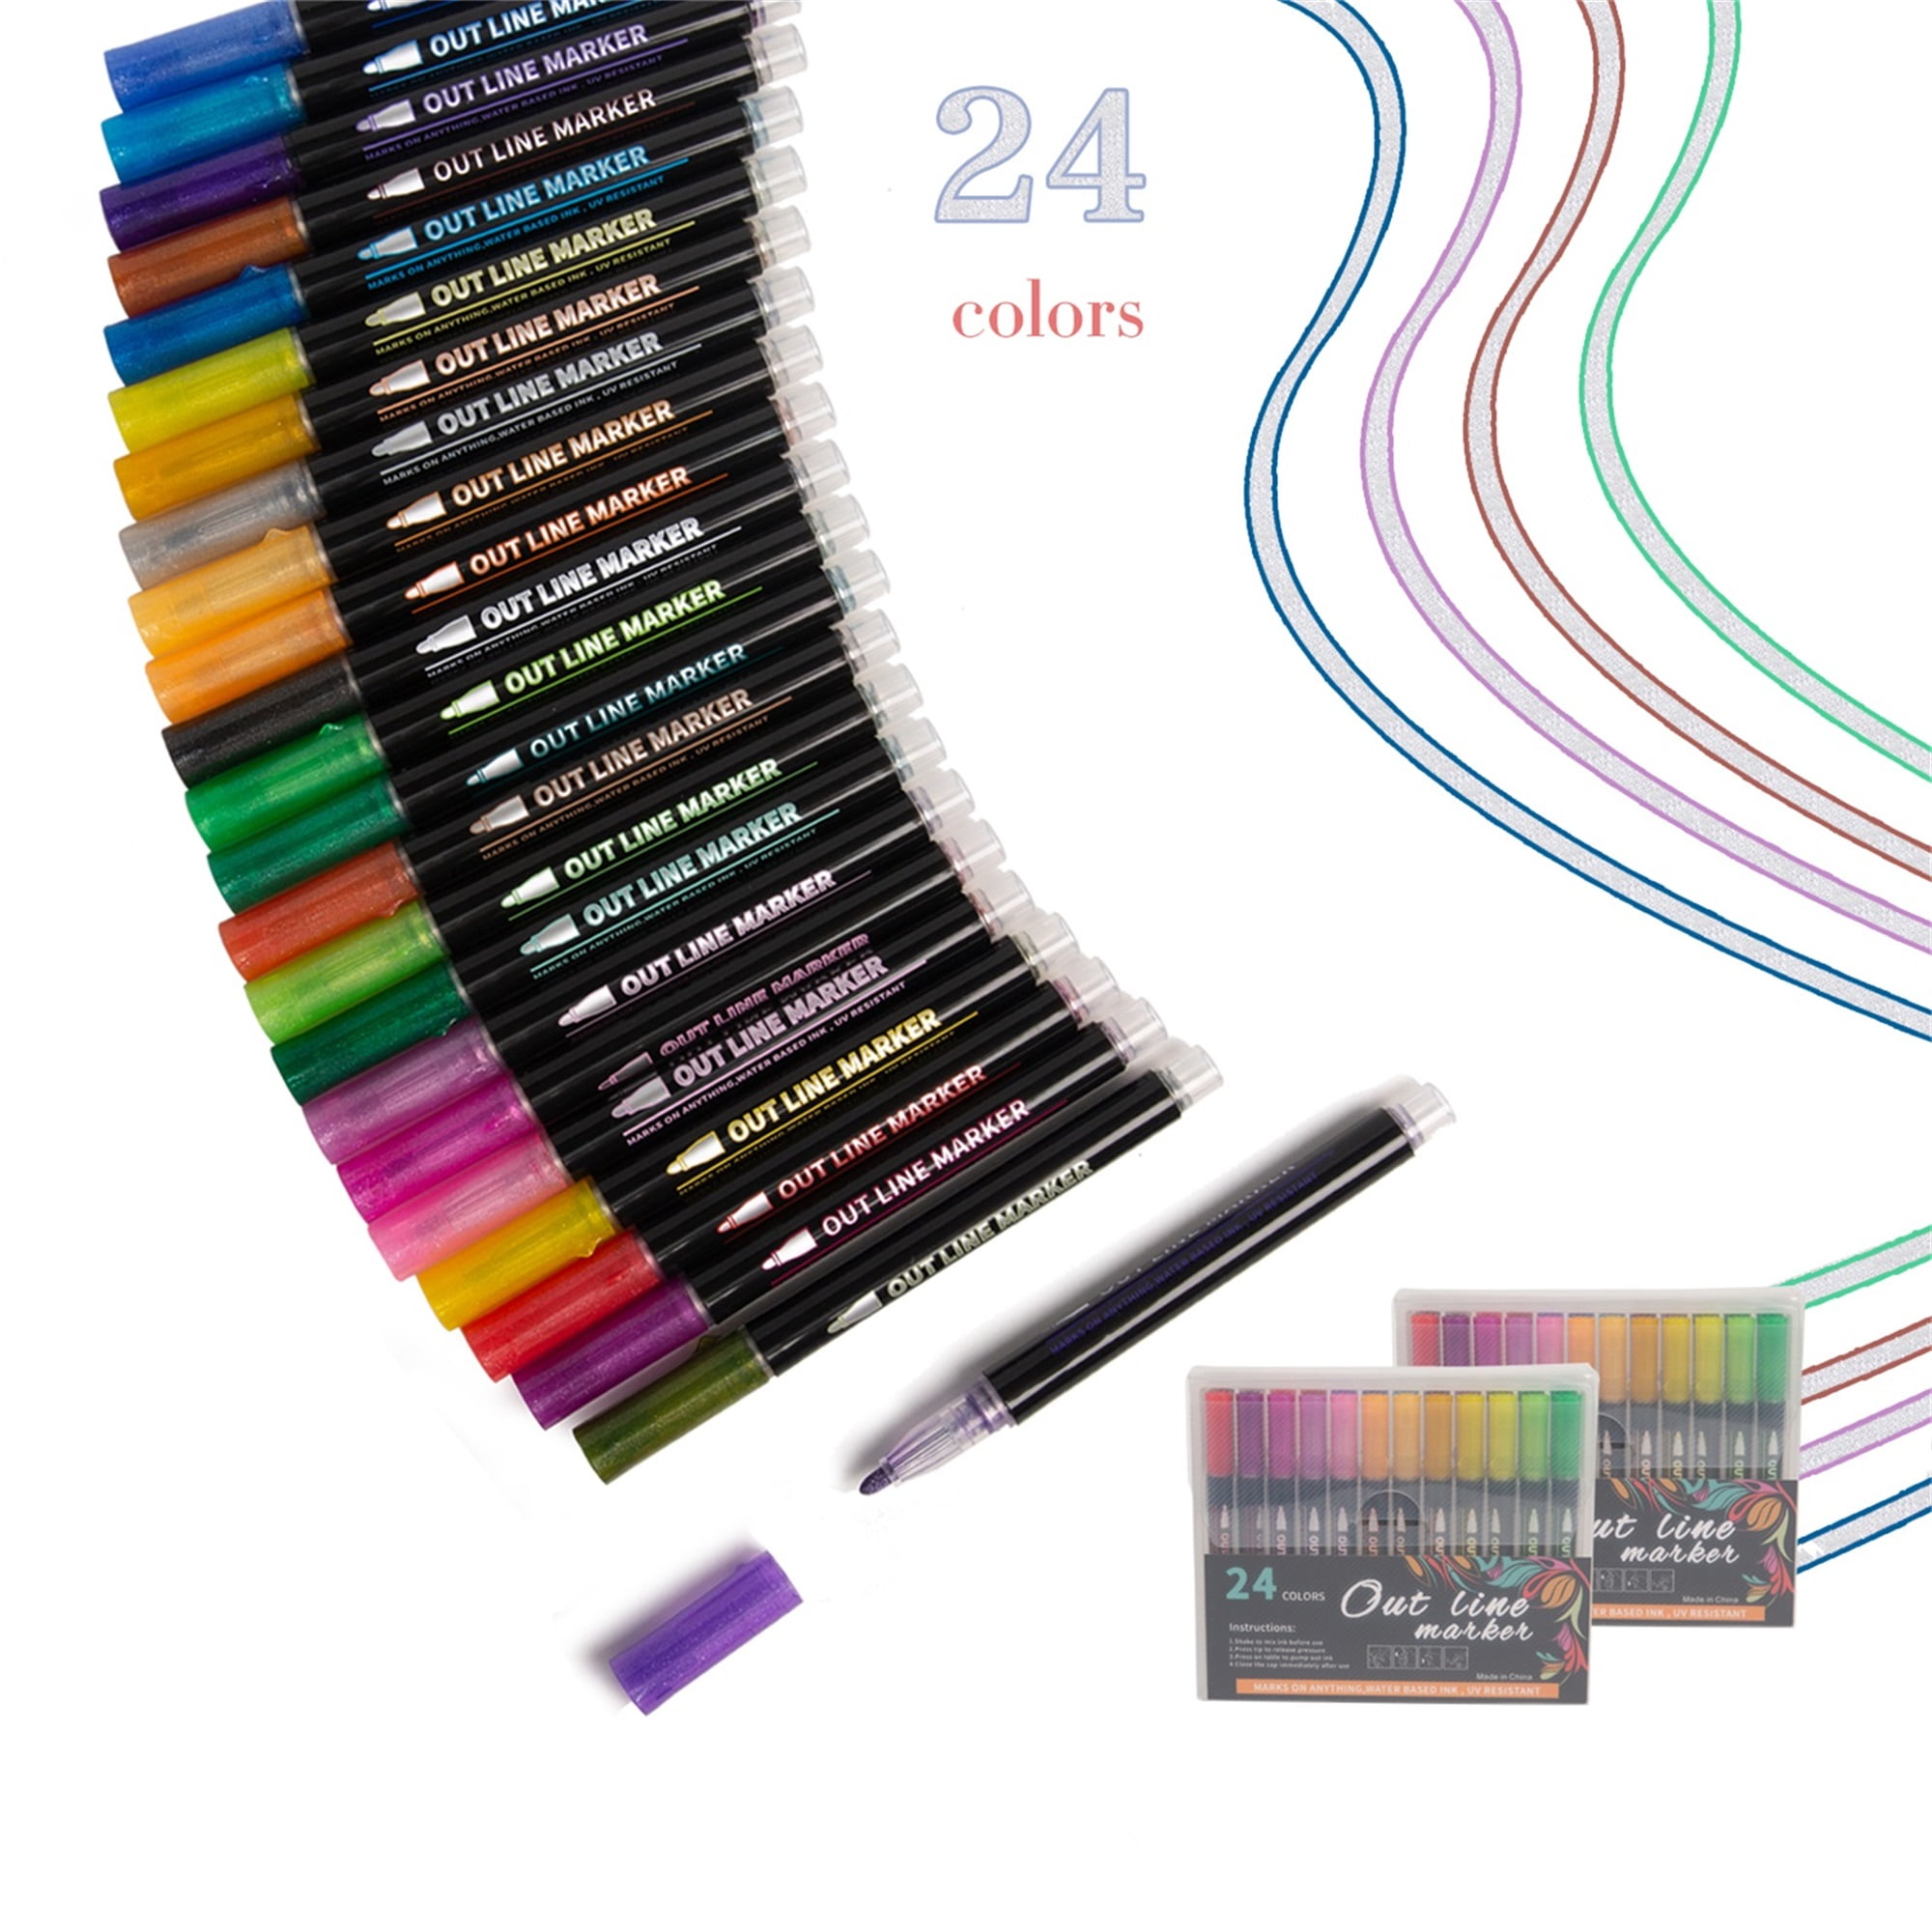 ULMTOP Outline Markers, Double Line Glitter Shimmer Markers Set of 12  Colors Self-outline Metallic Markers Pens for Card Making, Lettering, DIY  Art